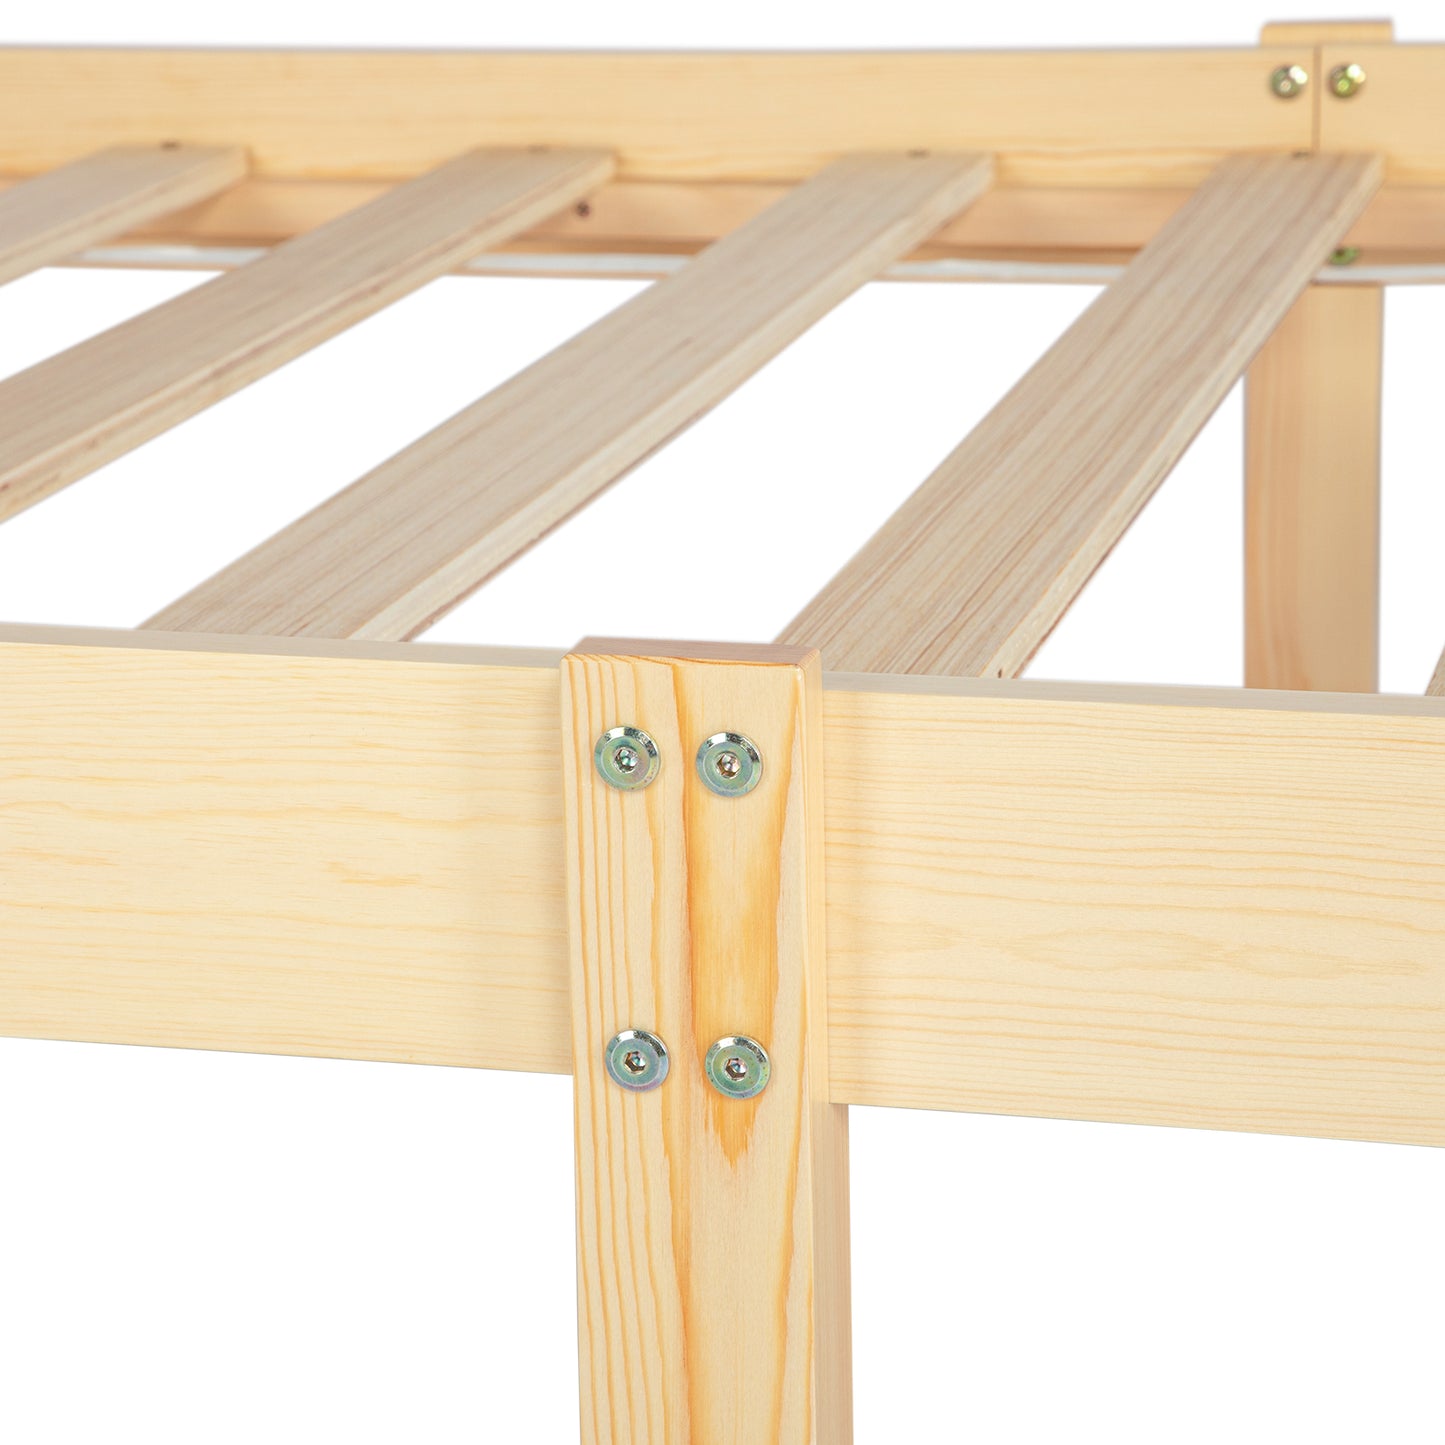 PONT Single Pine Wooden Bed 98*196cm - Wood